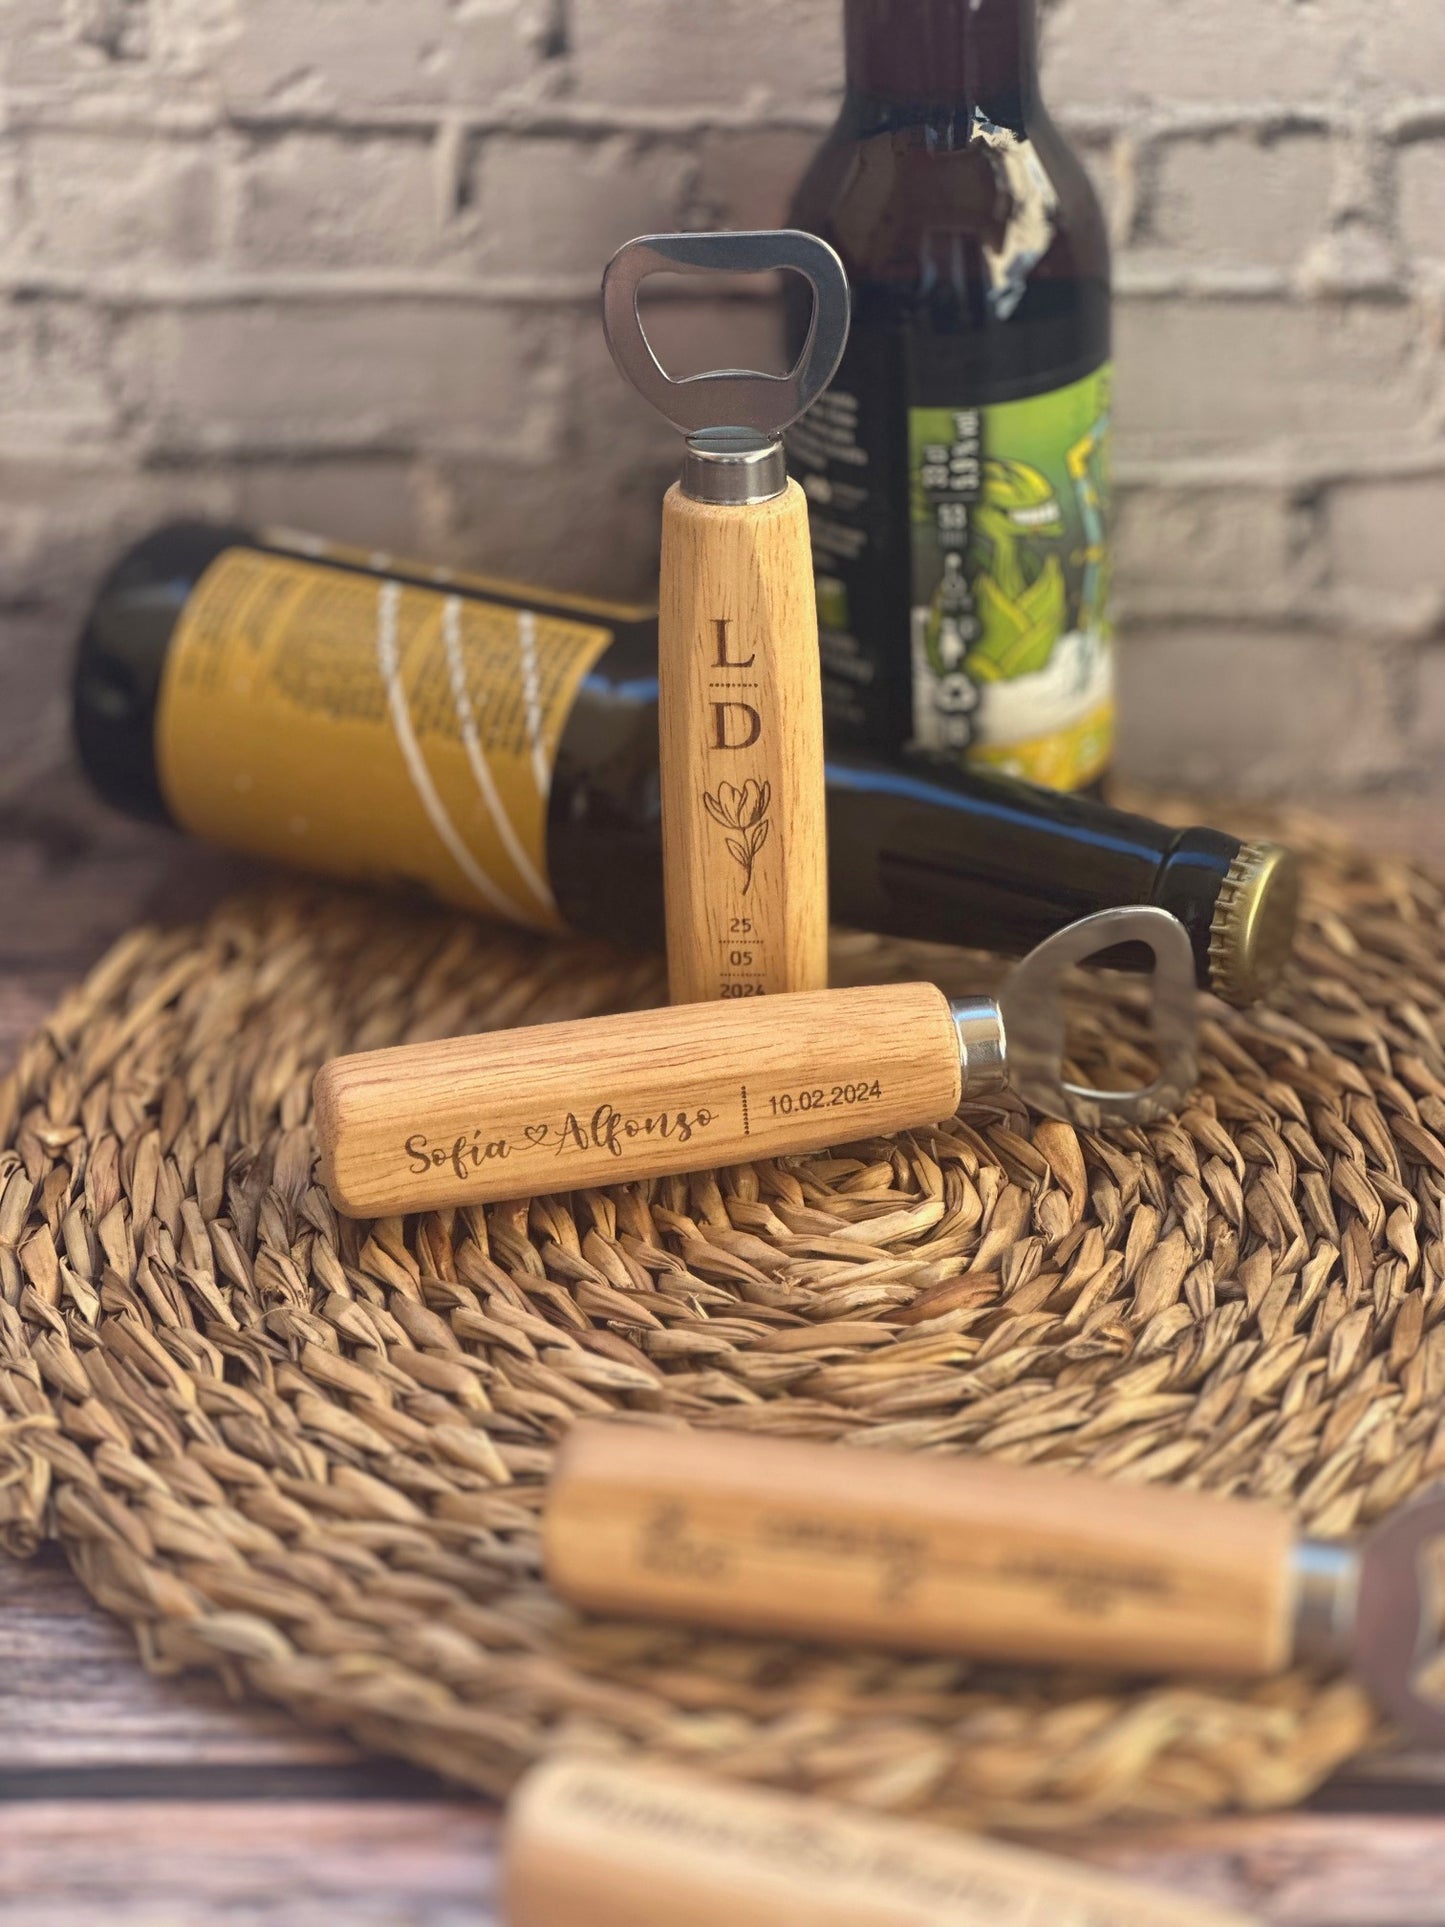 Personalized wooden bottle opener